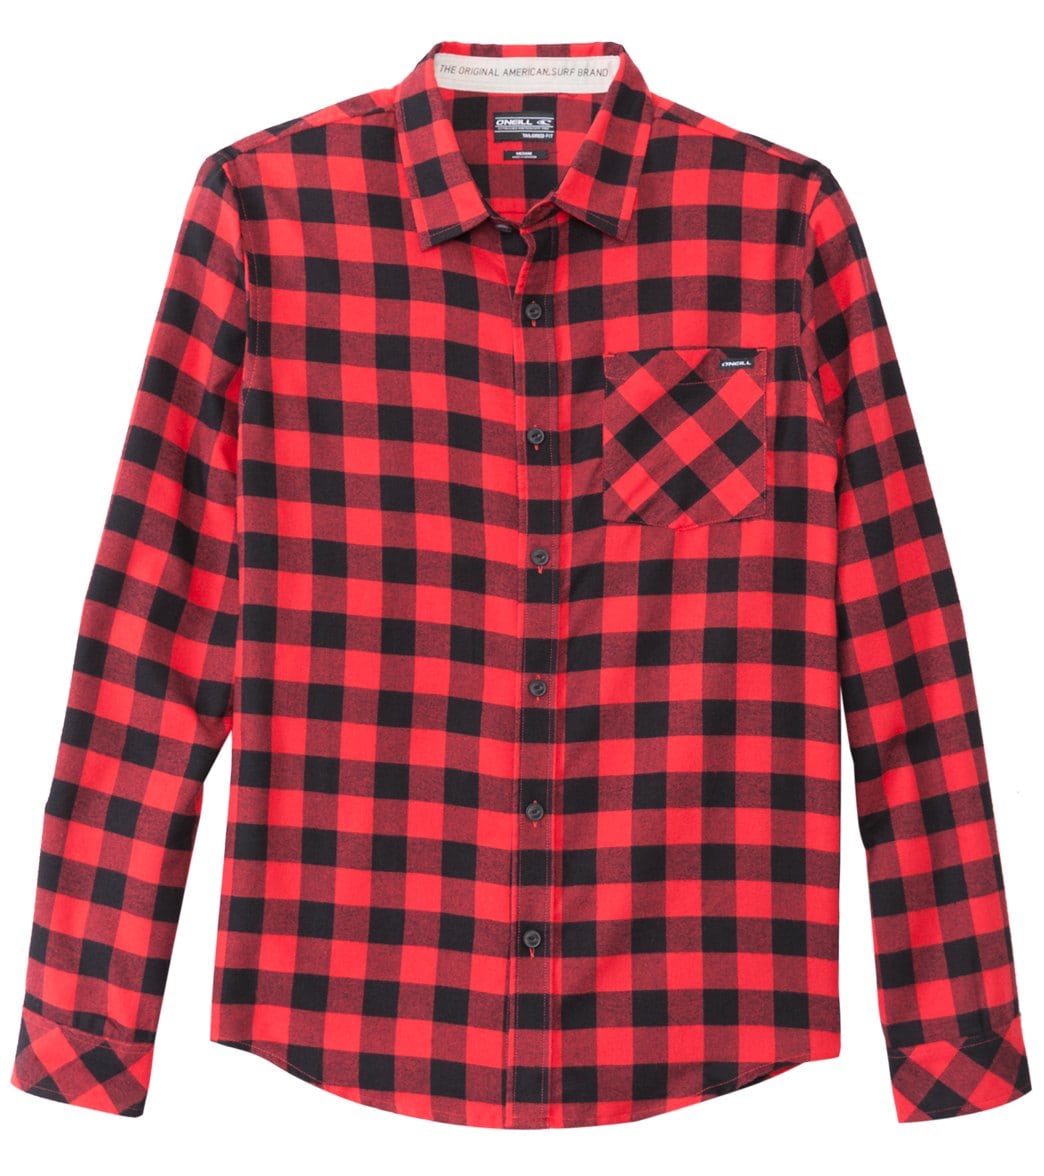 O'neill Men's Cooker Long Sleeve Shirt - Red Small Cotton/Polyester - Swimoutlet.com